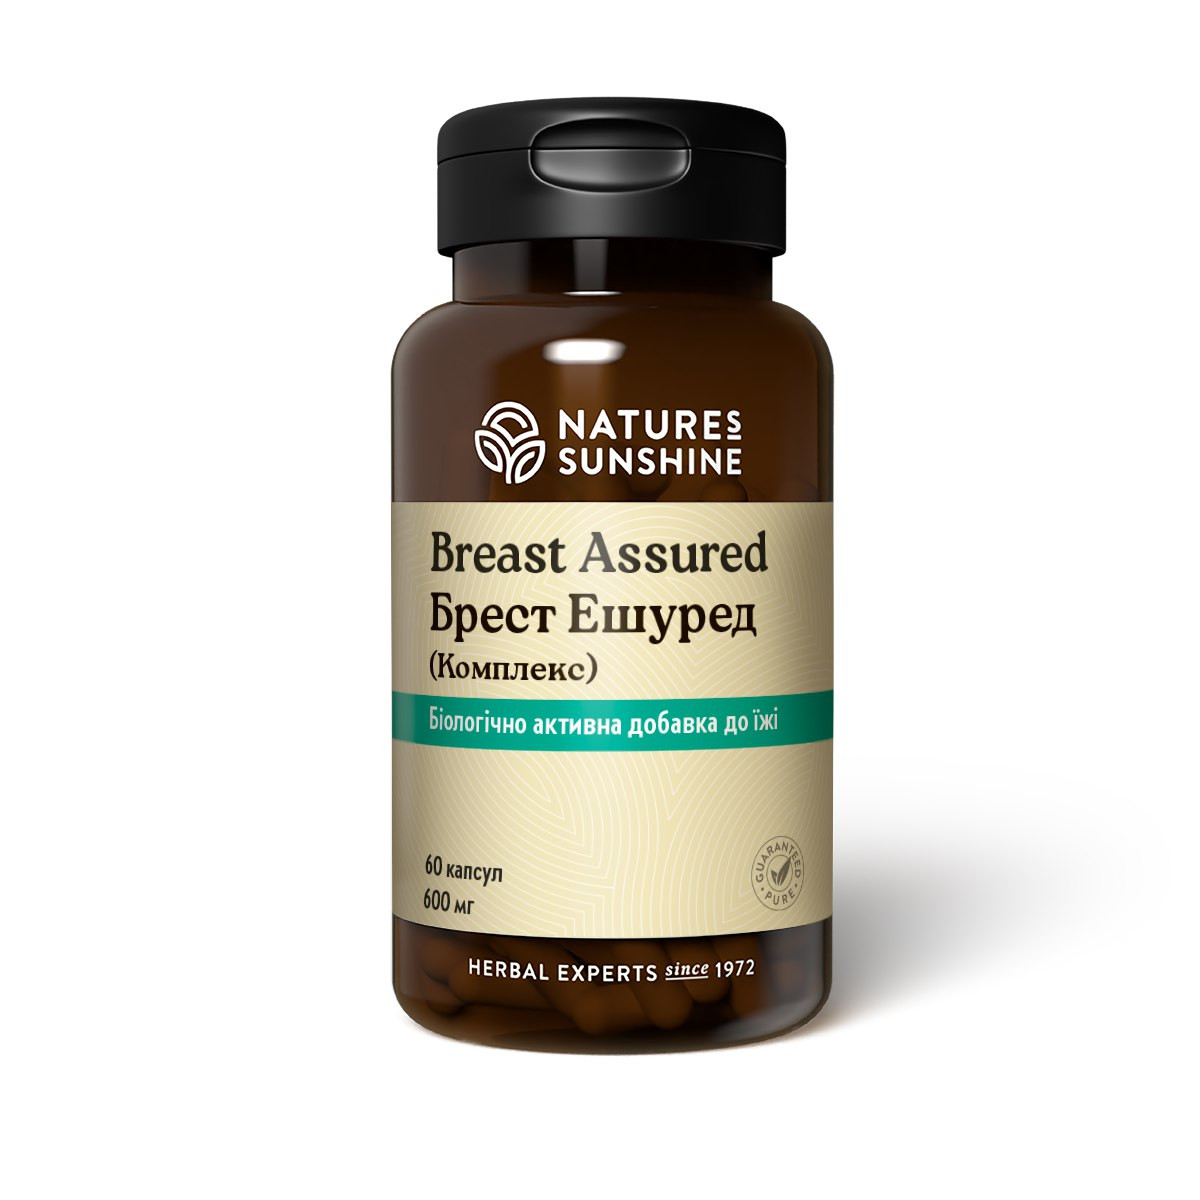 Breast Assured